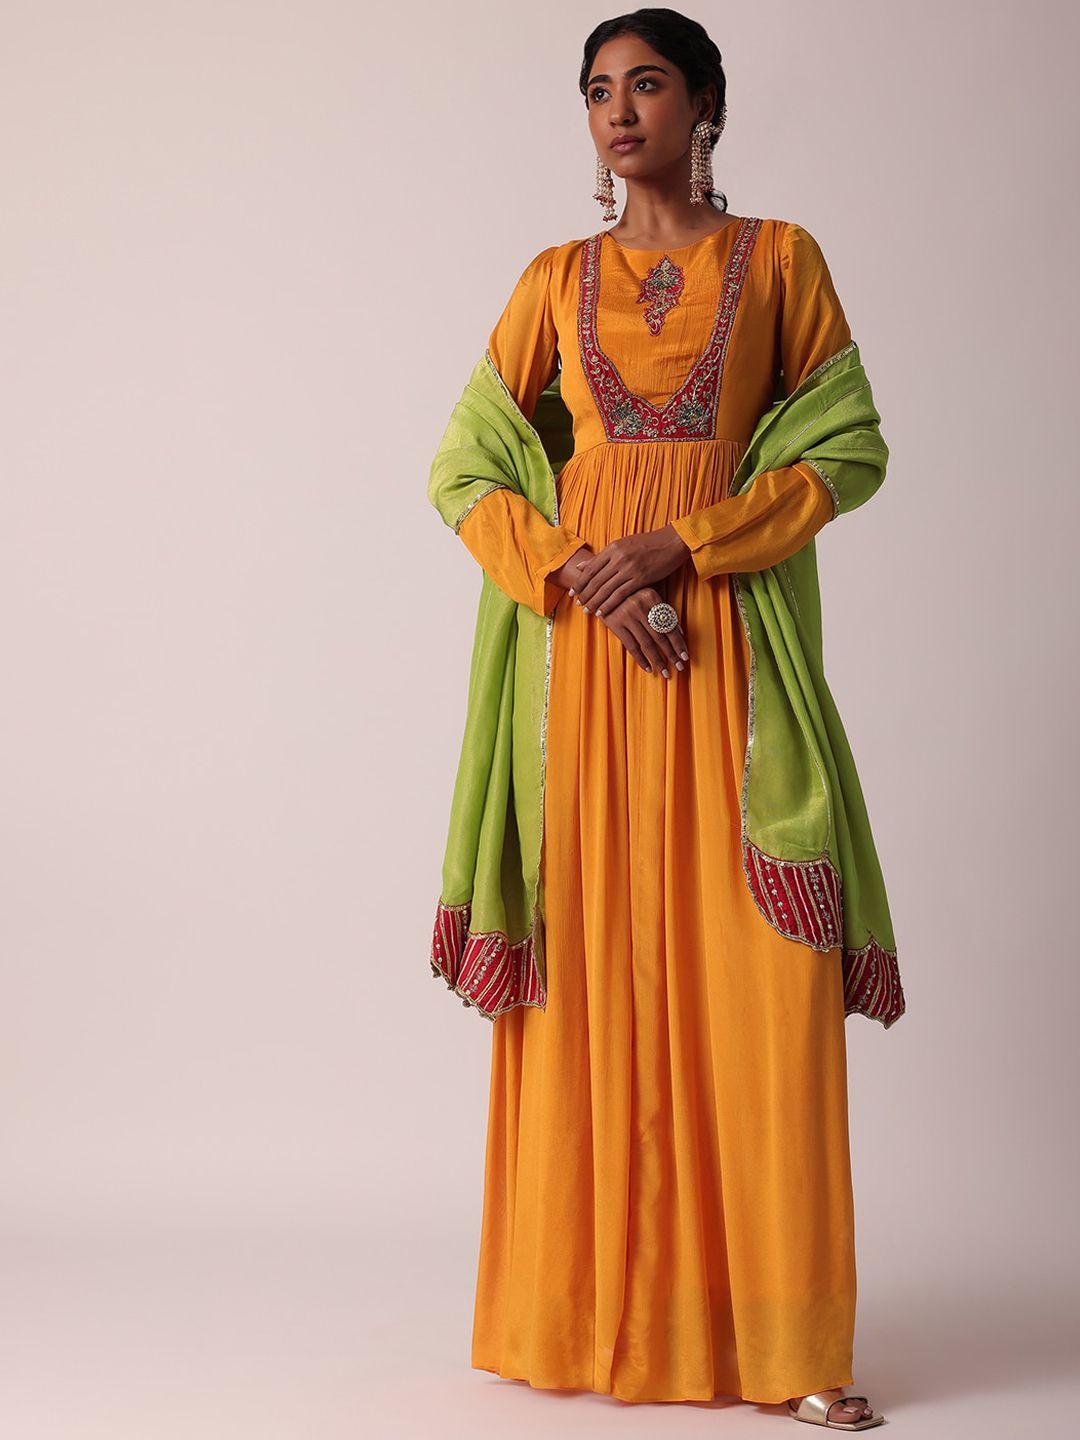 kalki fashion maxi length anarkali dress with dupatta